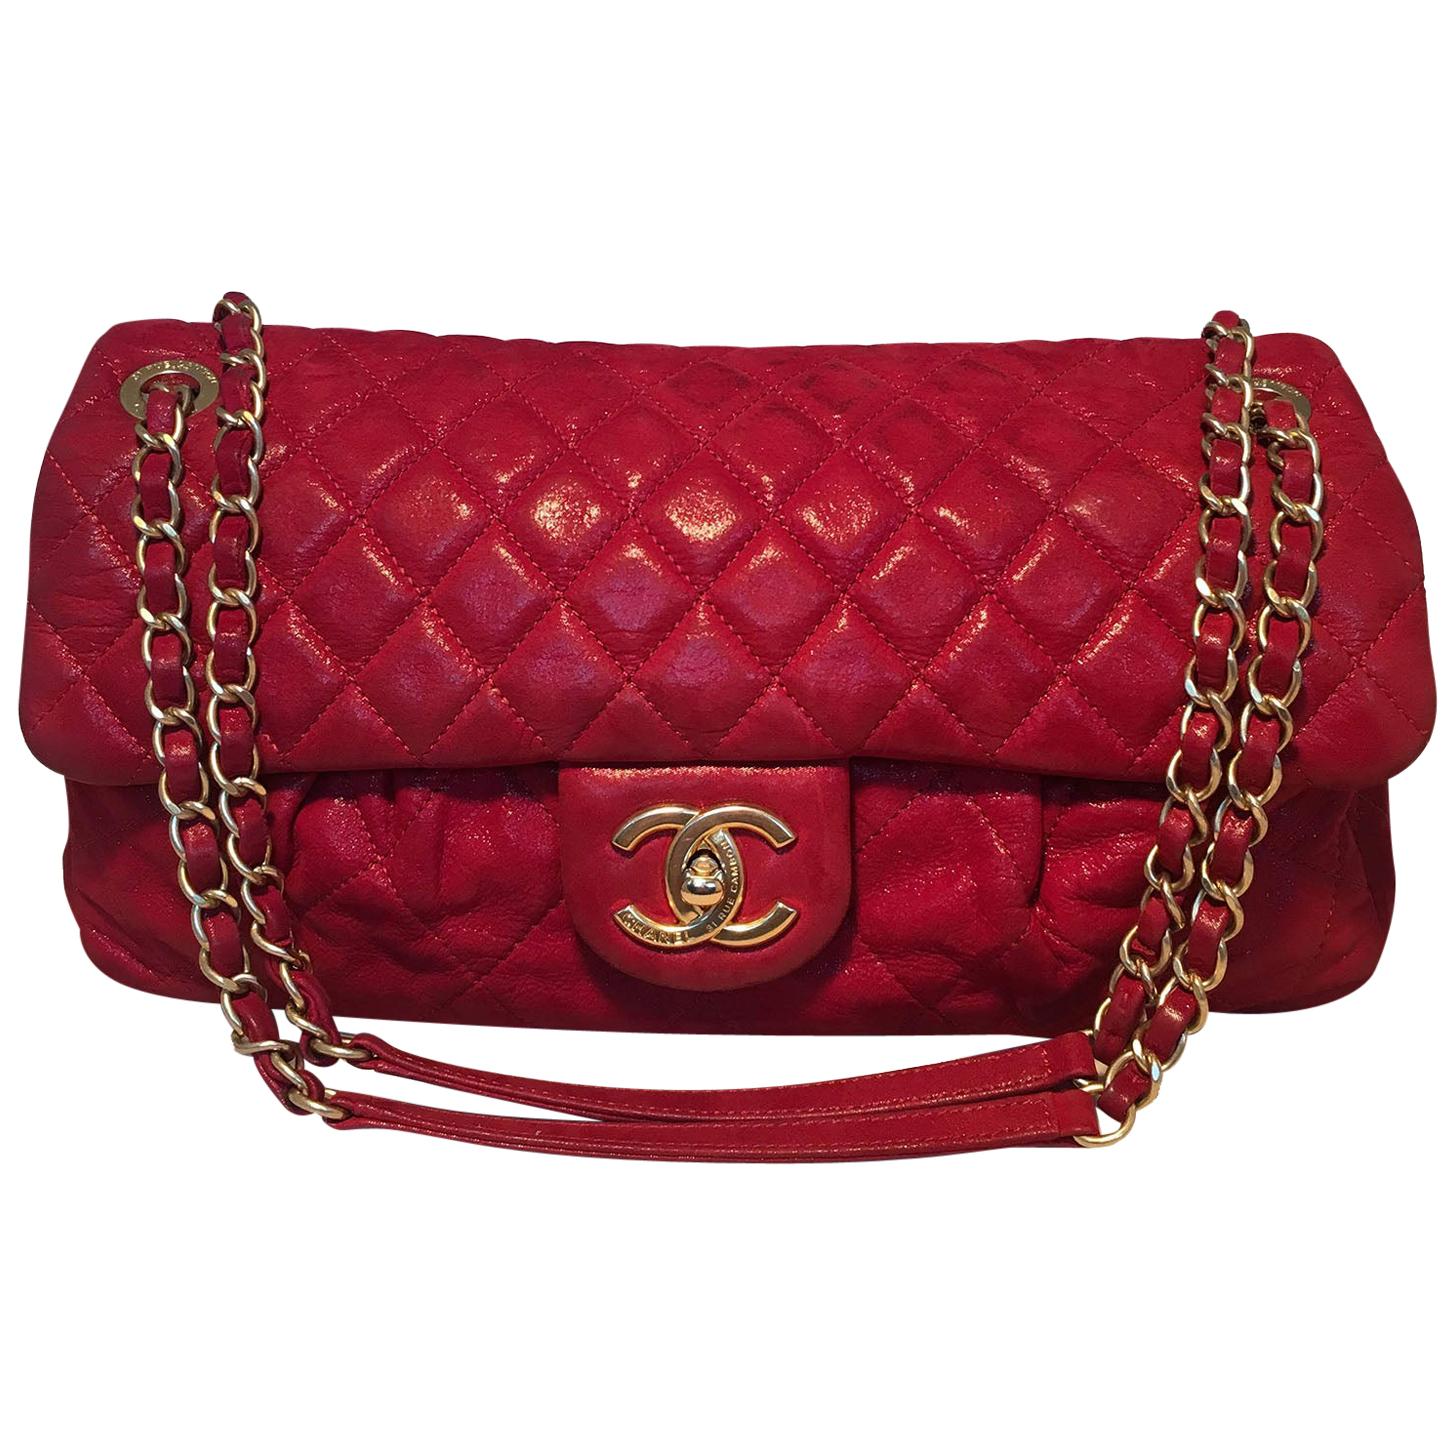 Chanel Red Iridescent Calfskin Chic Quilt Flap Bag